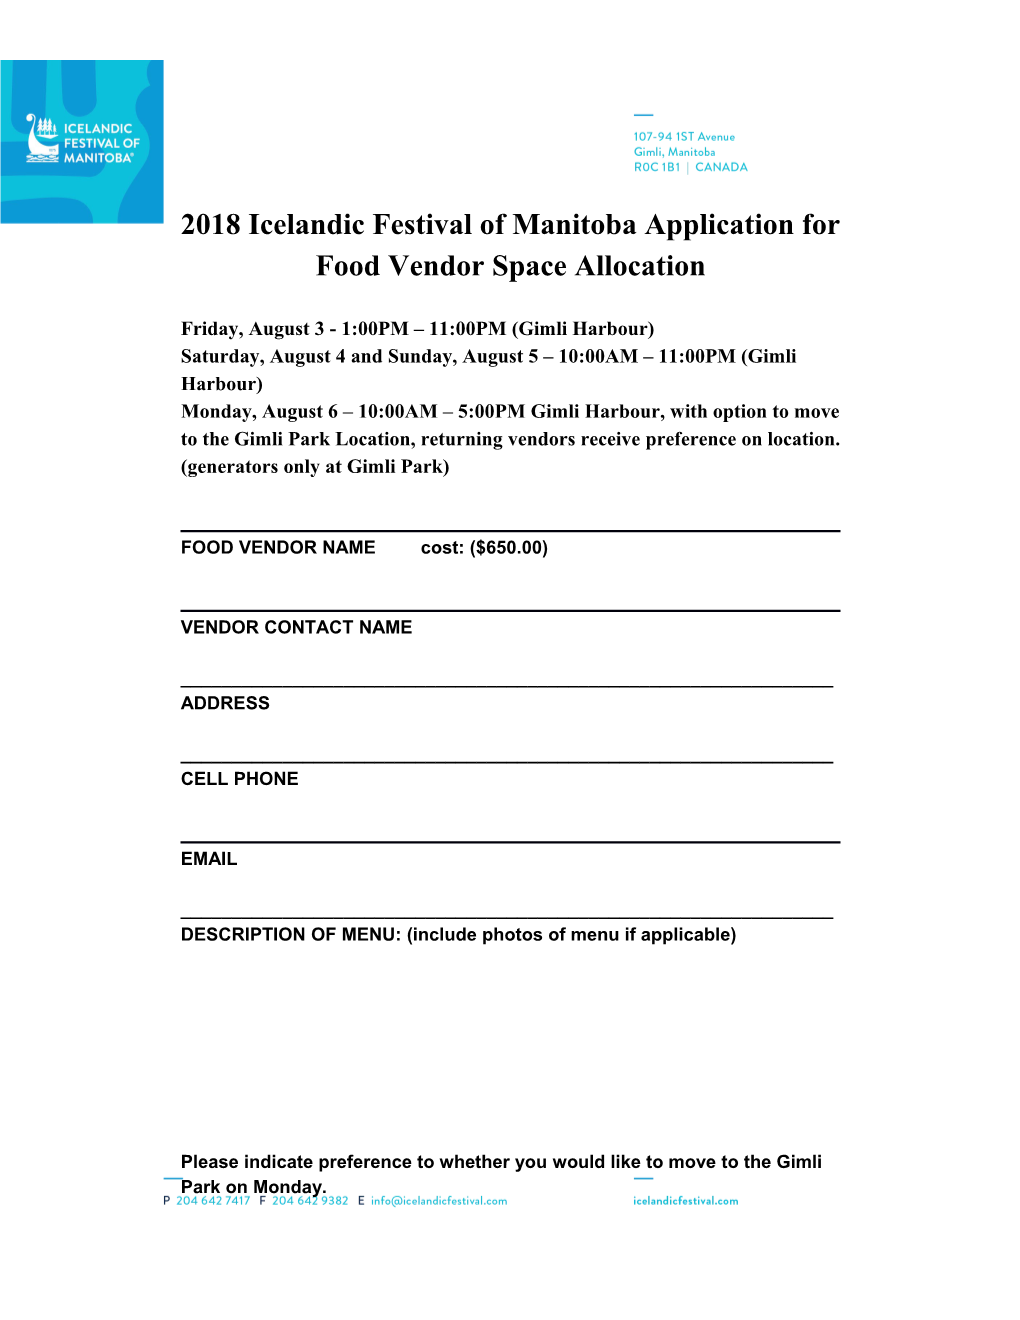 2018 Icelandic Festival of Manitoba Application for Food Vendor Space Allocation